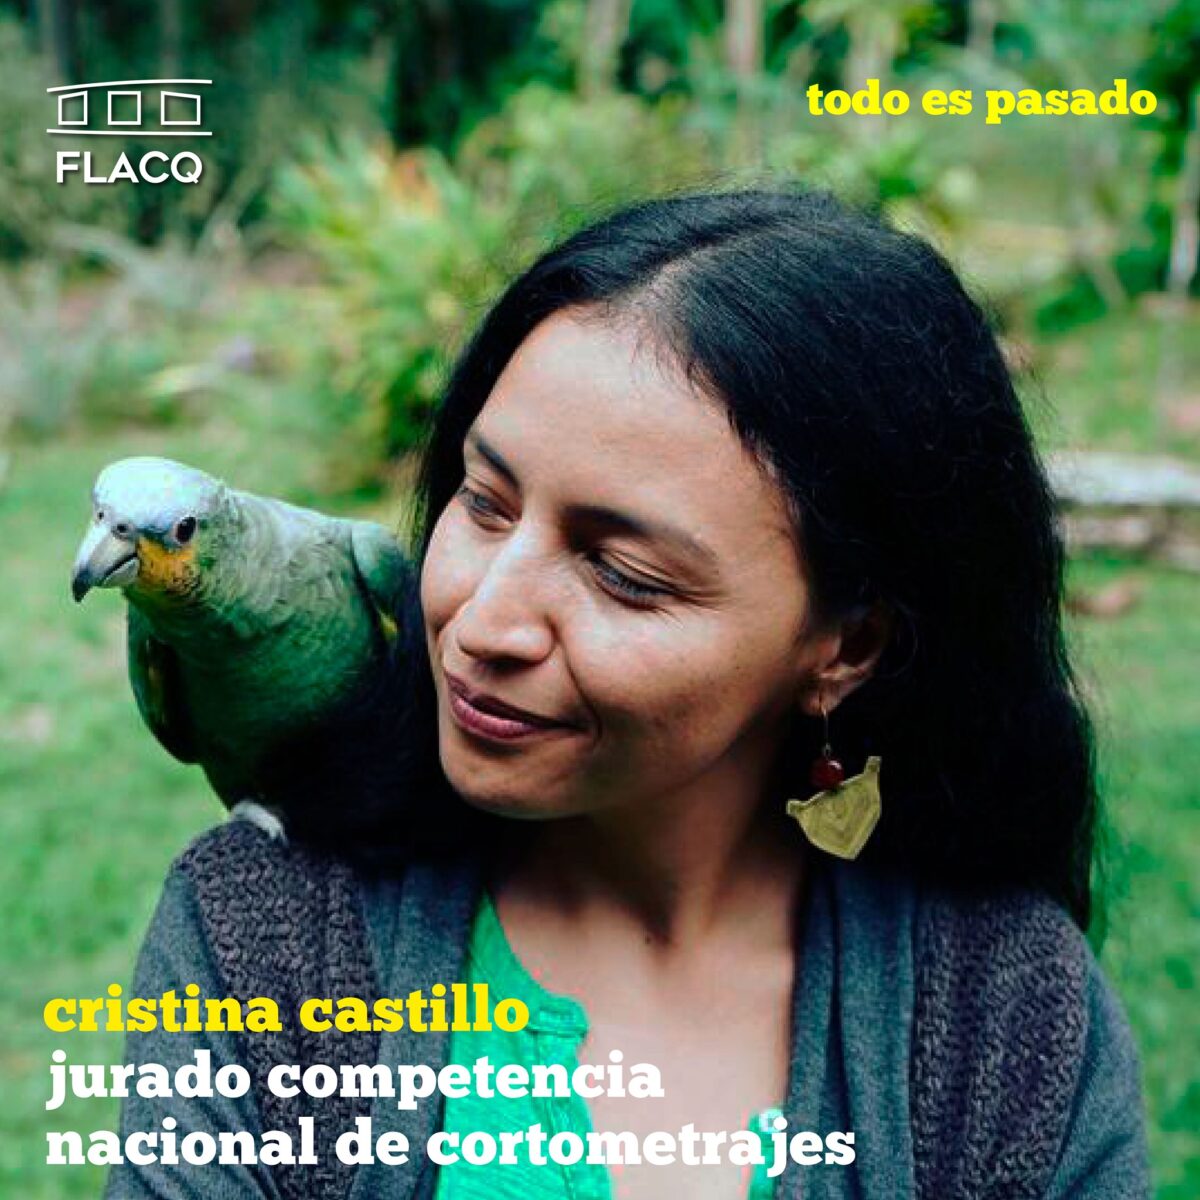 Cristina Castillo, jurado del concurso nacional de cortometrajes del FLACQ